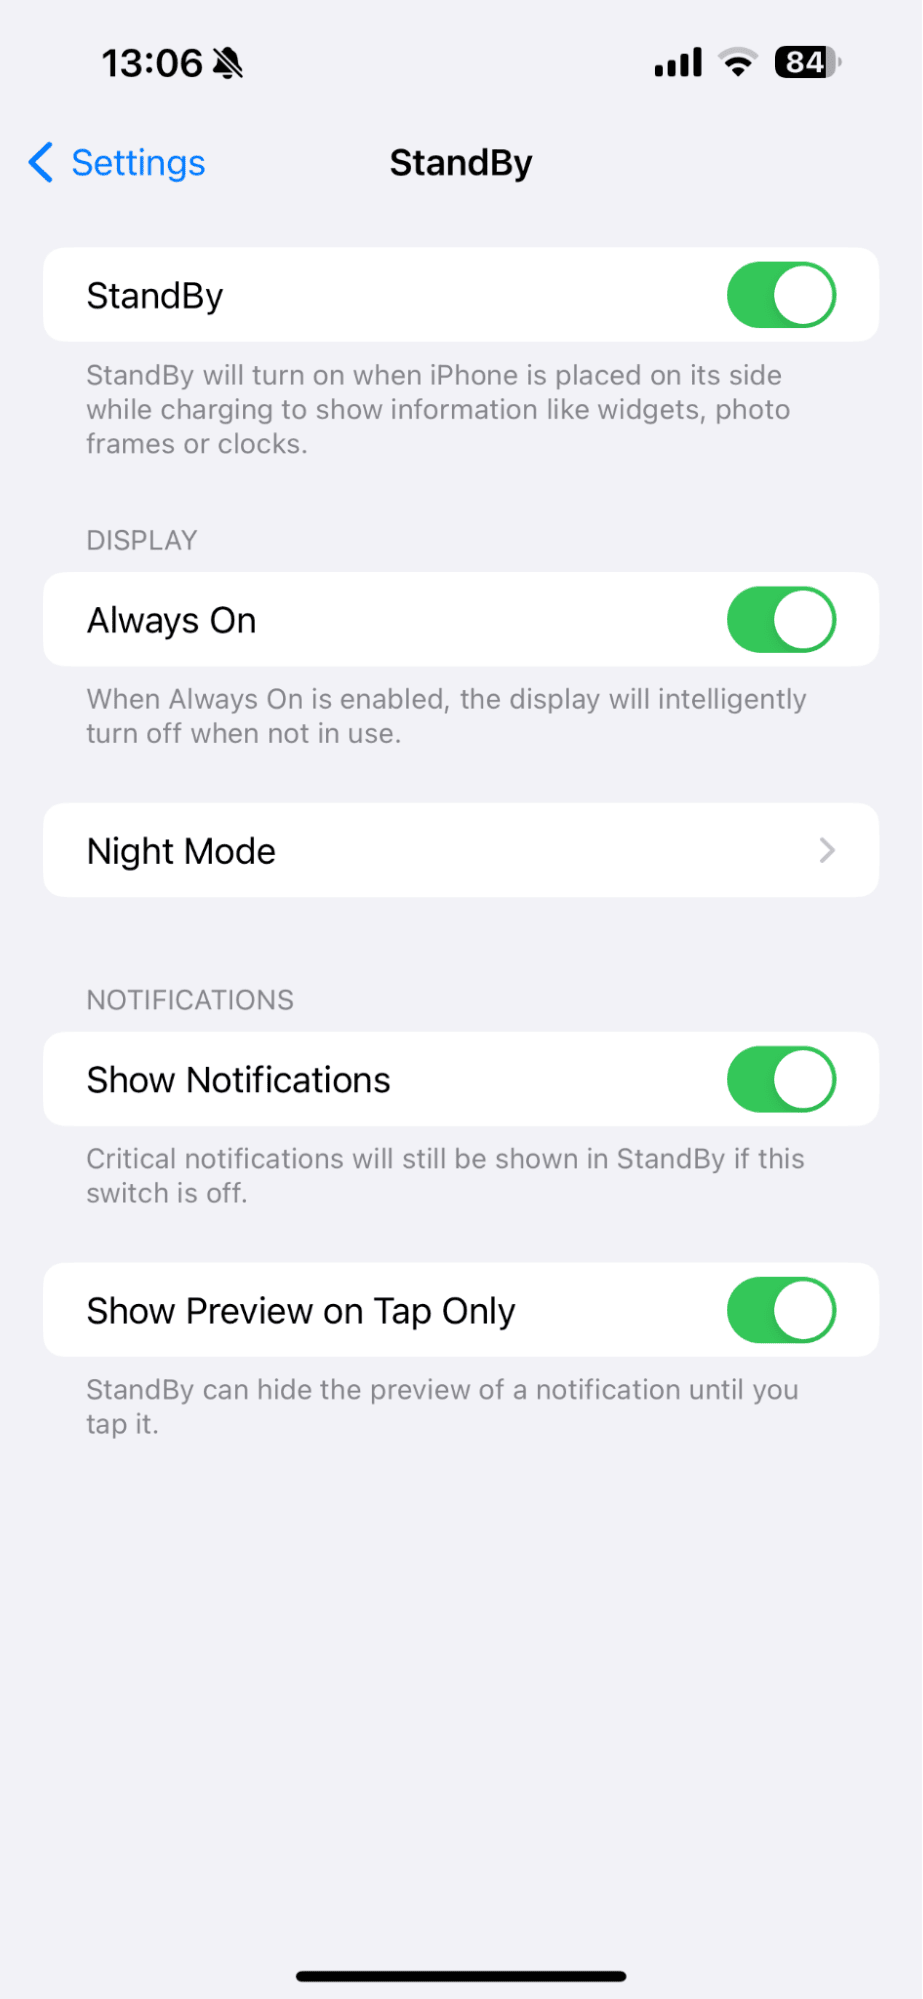 StandBy on iOS 17